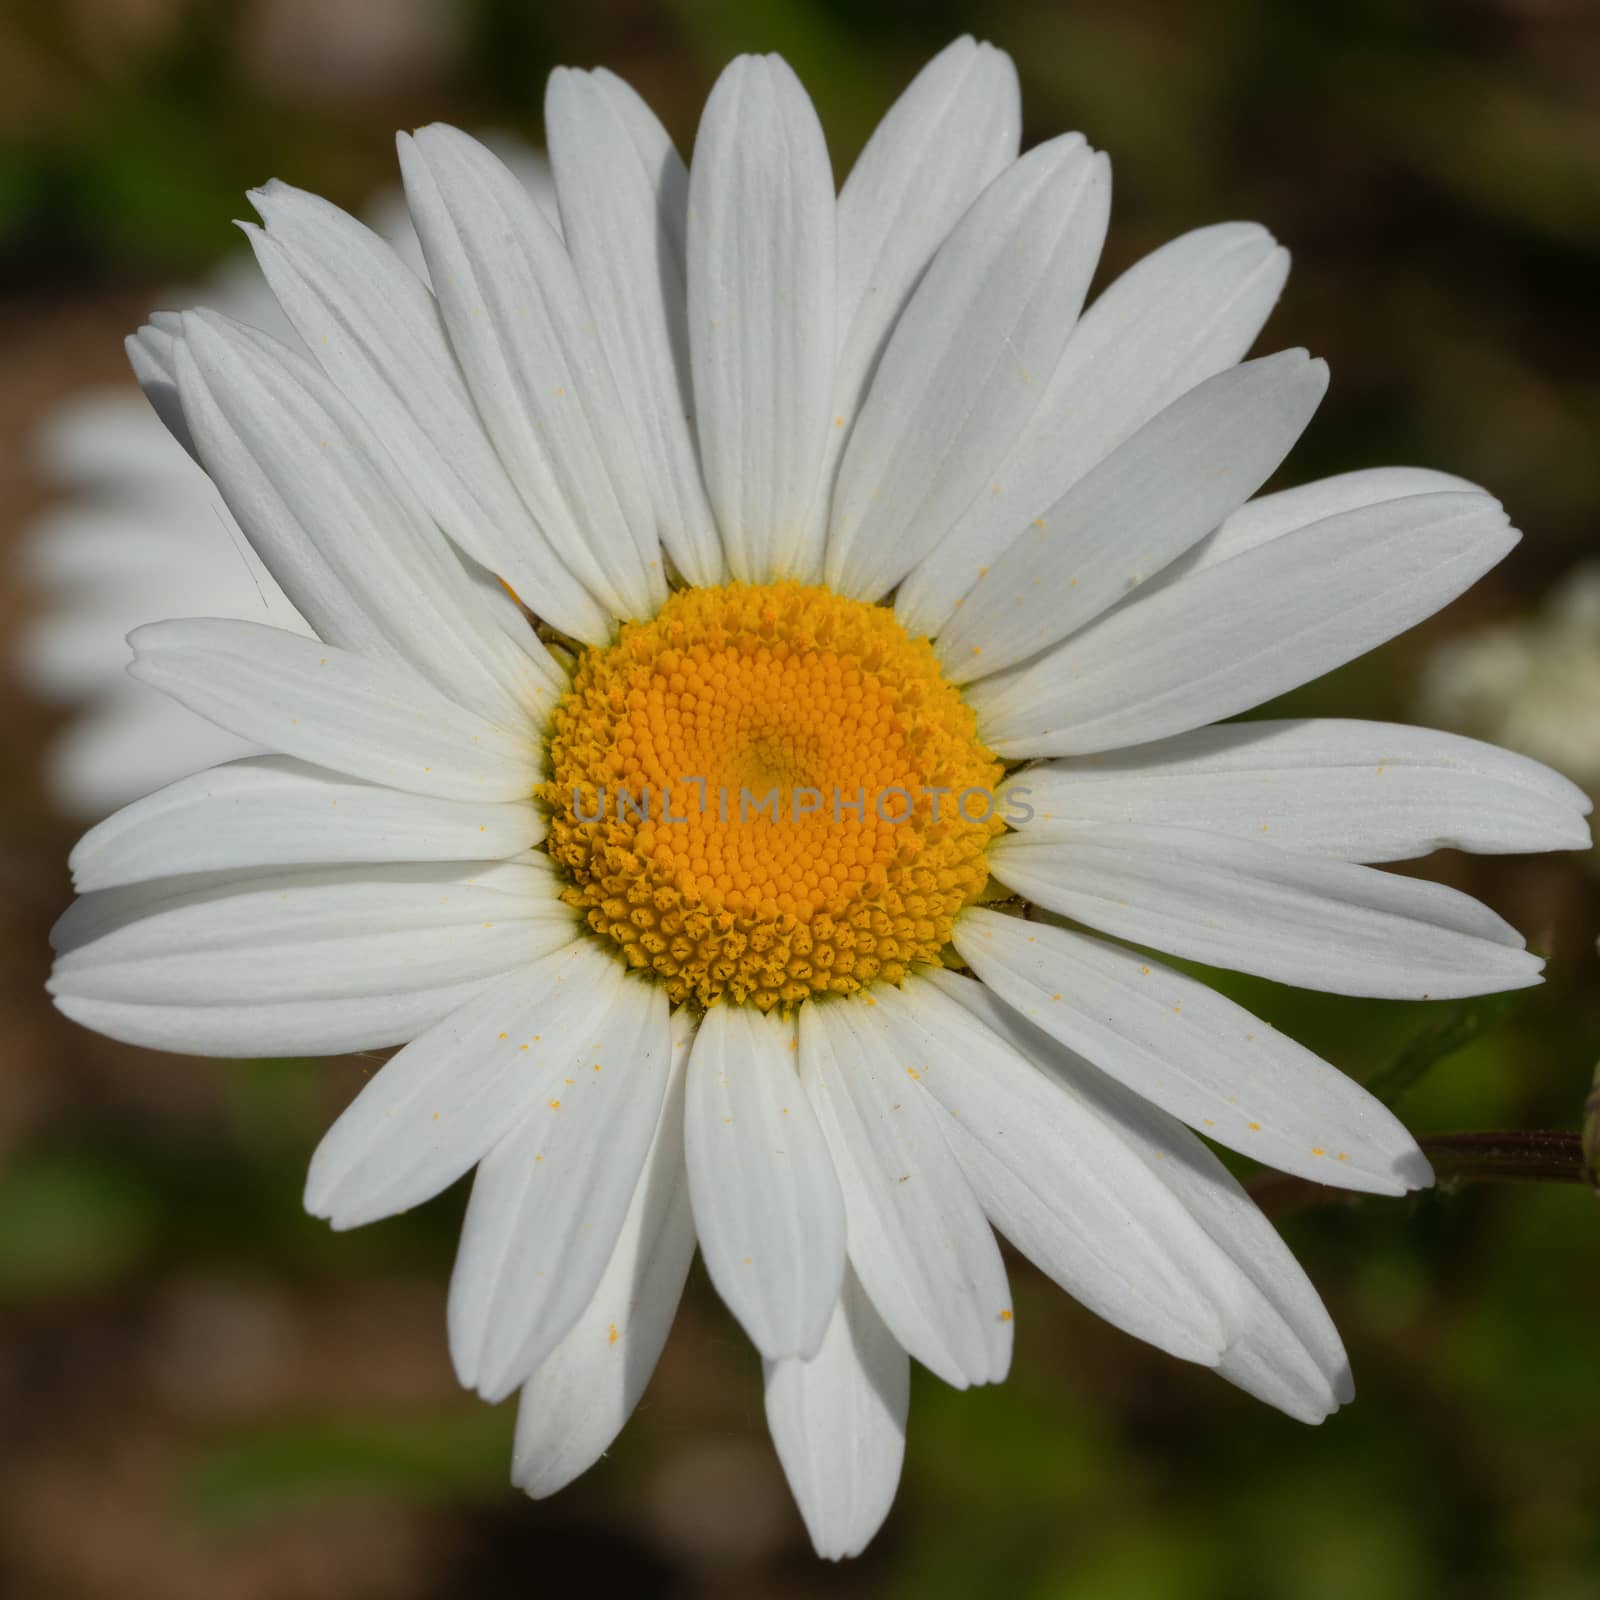 Common daisy, Leucanthemum vulgare by alfotokunst